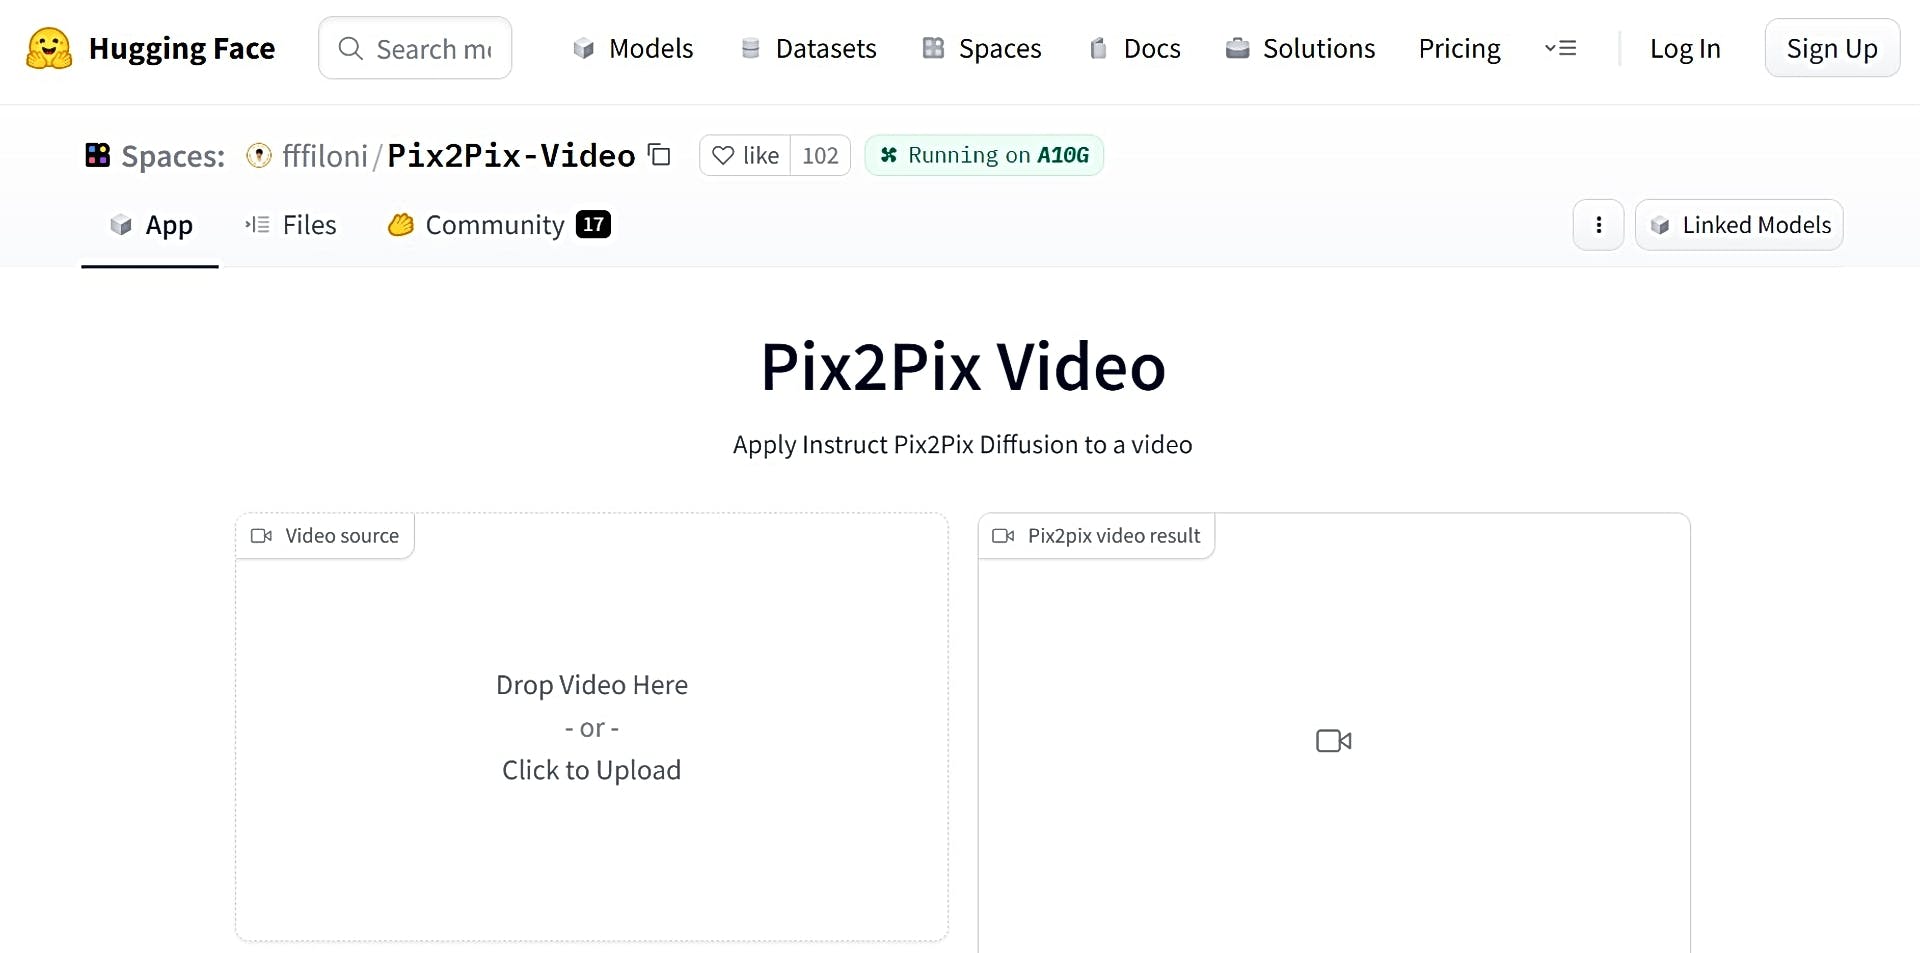 Pix2Pix featured